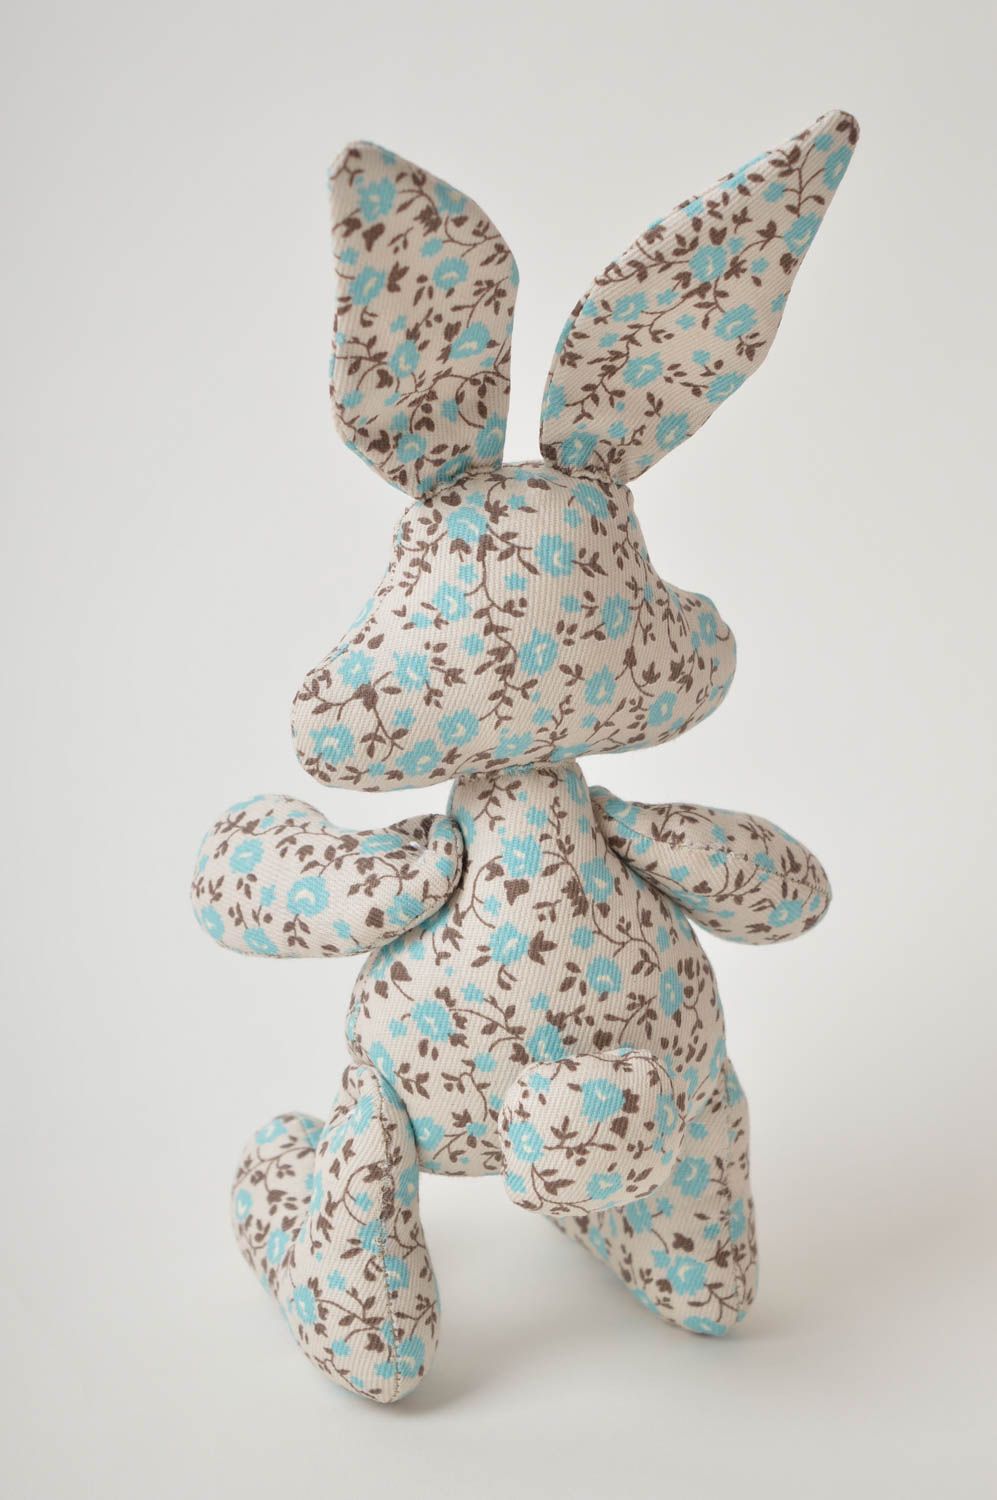 Decorative handmade bunny toy stuffed toy for children soft toy interior decor photo 3